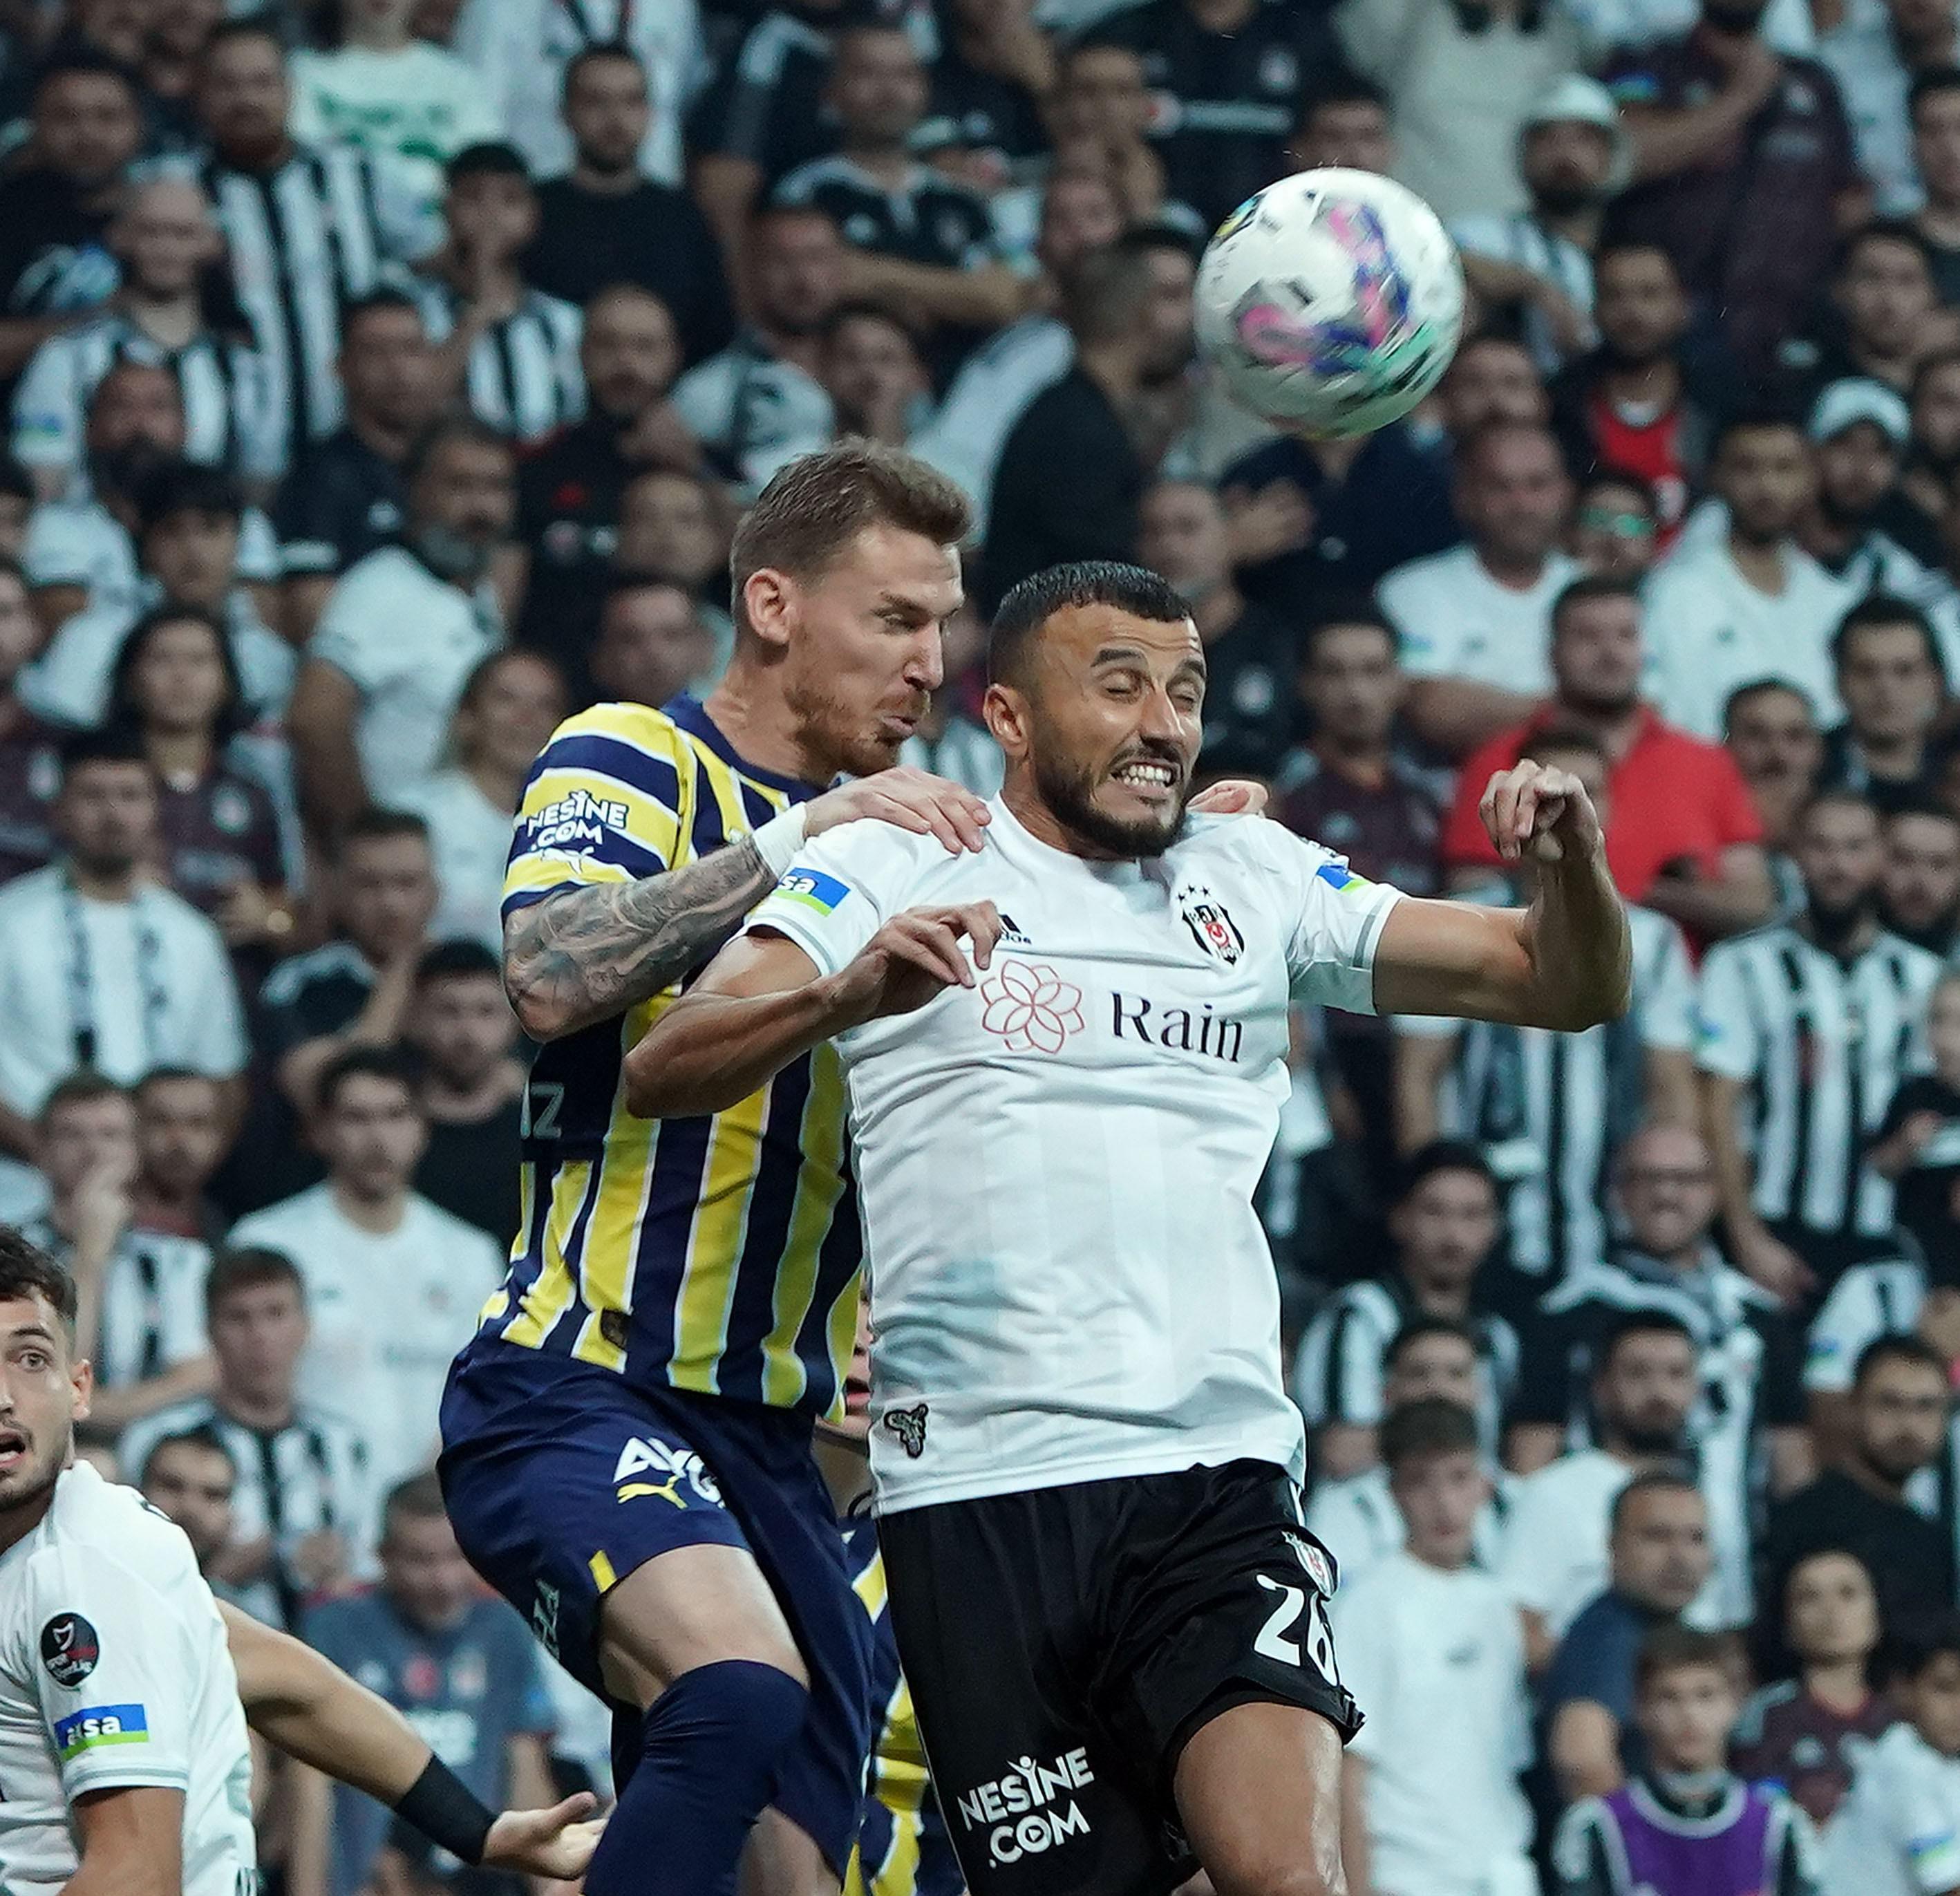 (ÖZET) Beşiktaş - Fenerbahçe maç sonucu: 0-0